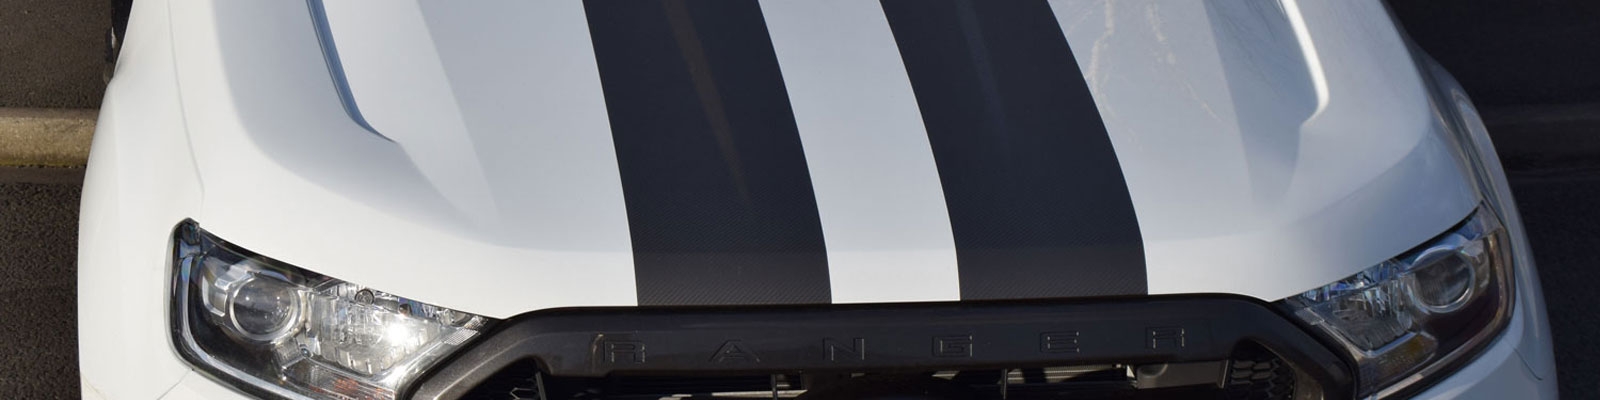 Vehicle Styling Stripes